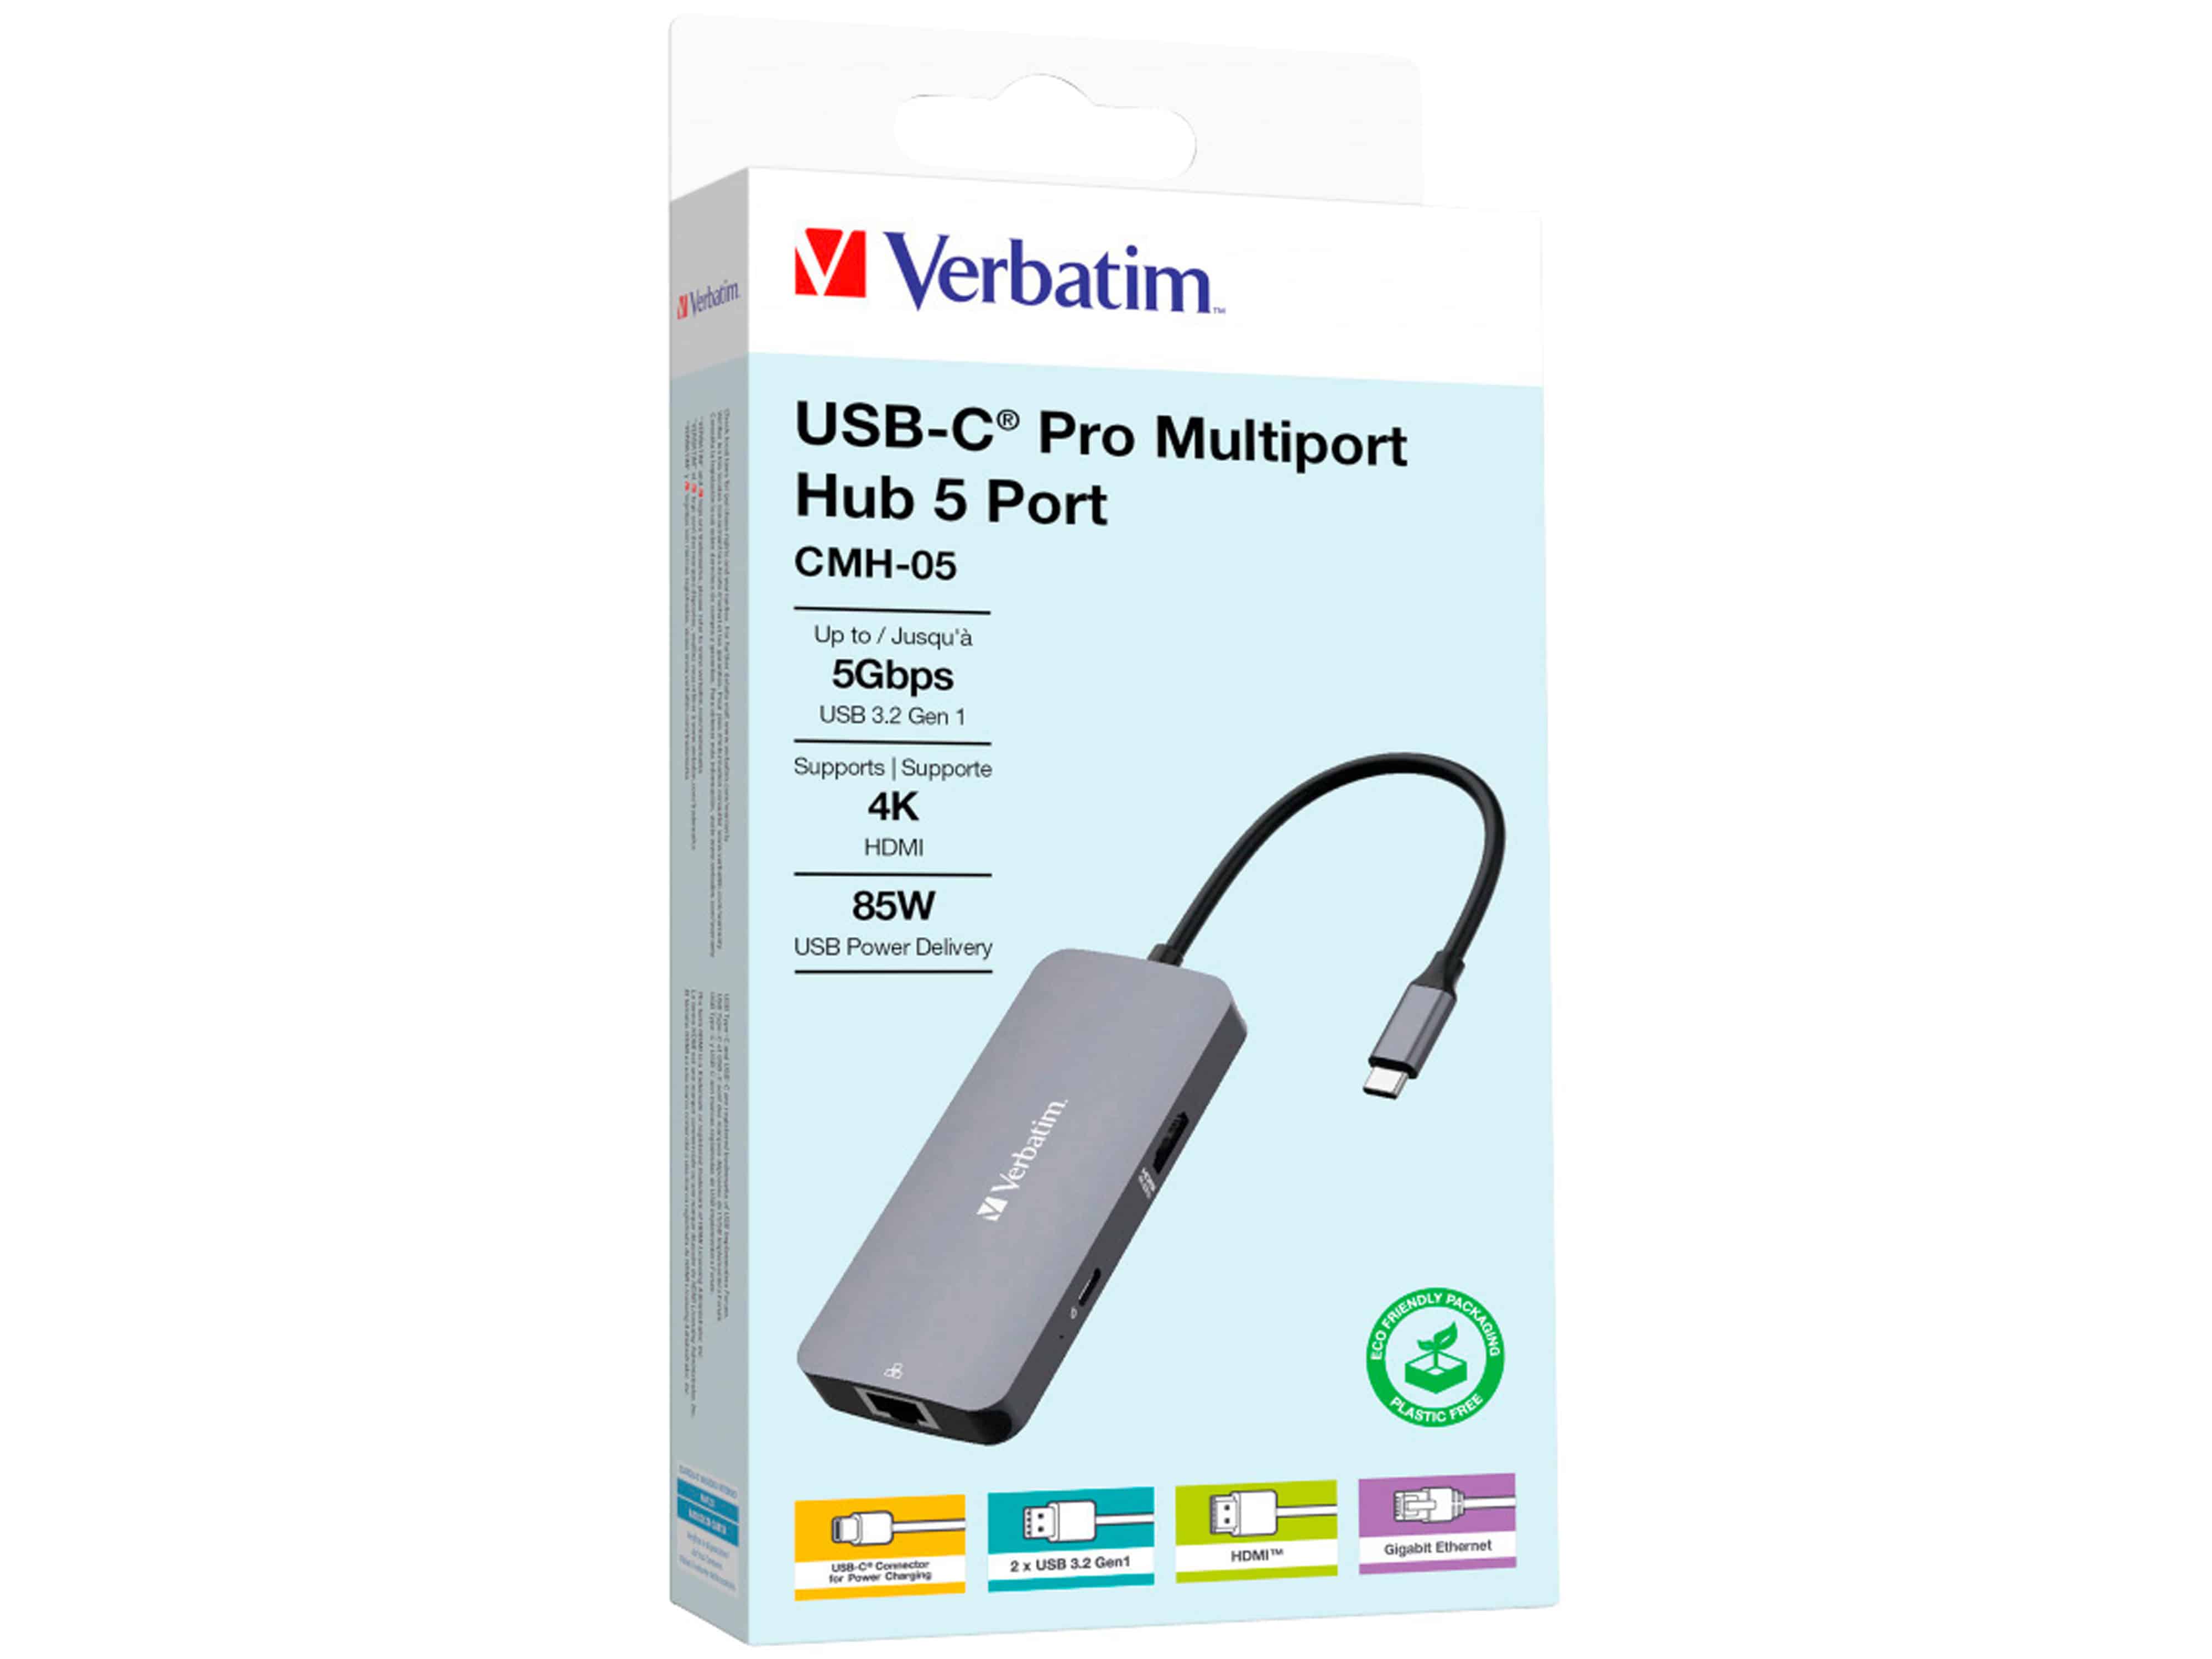 VERBATIM USB-C Pro Multiport Hub CMH-05